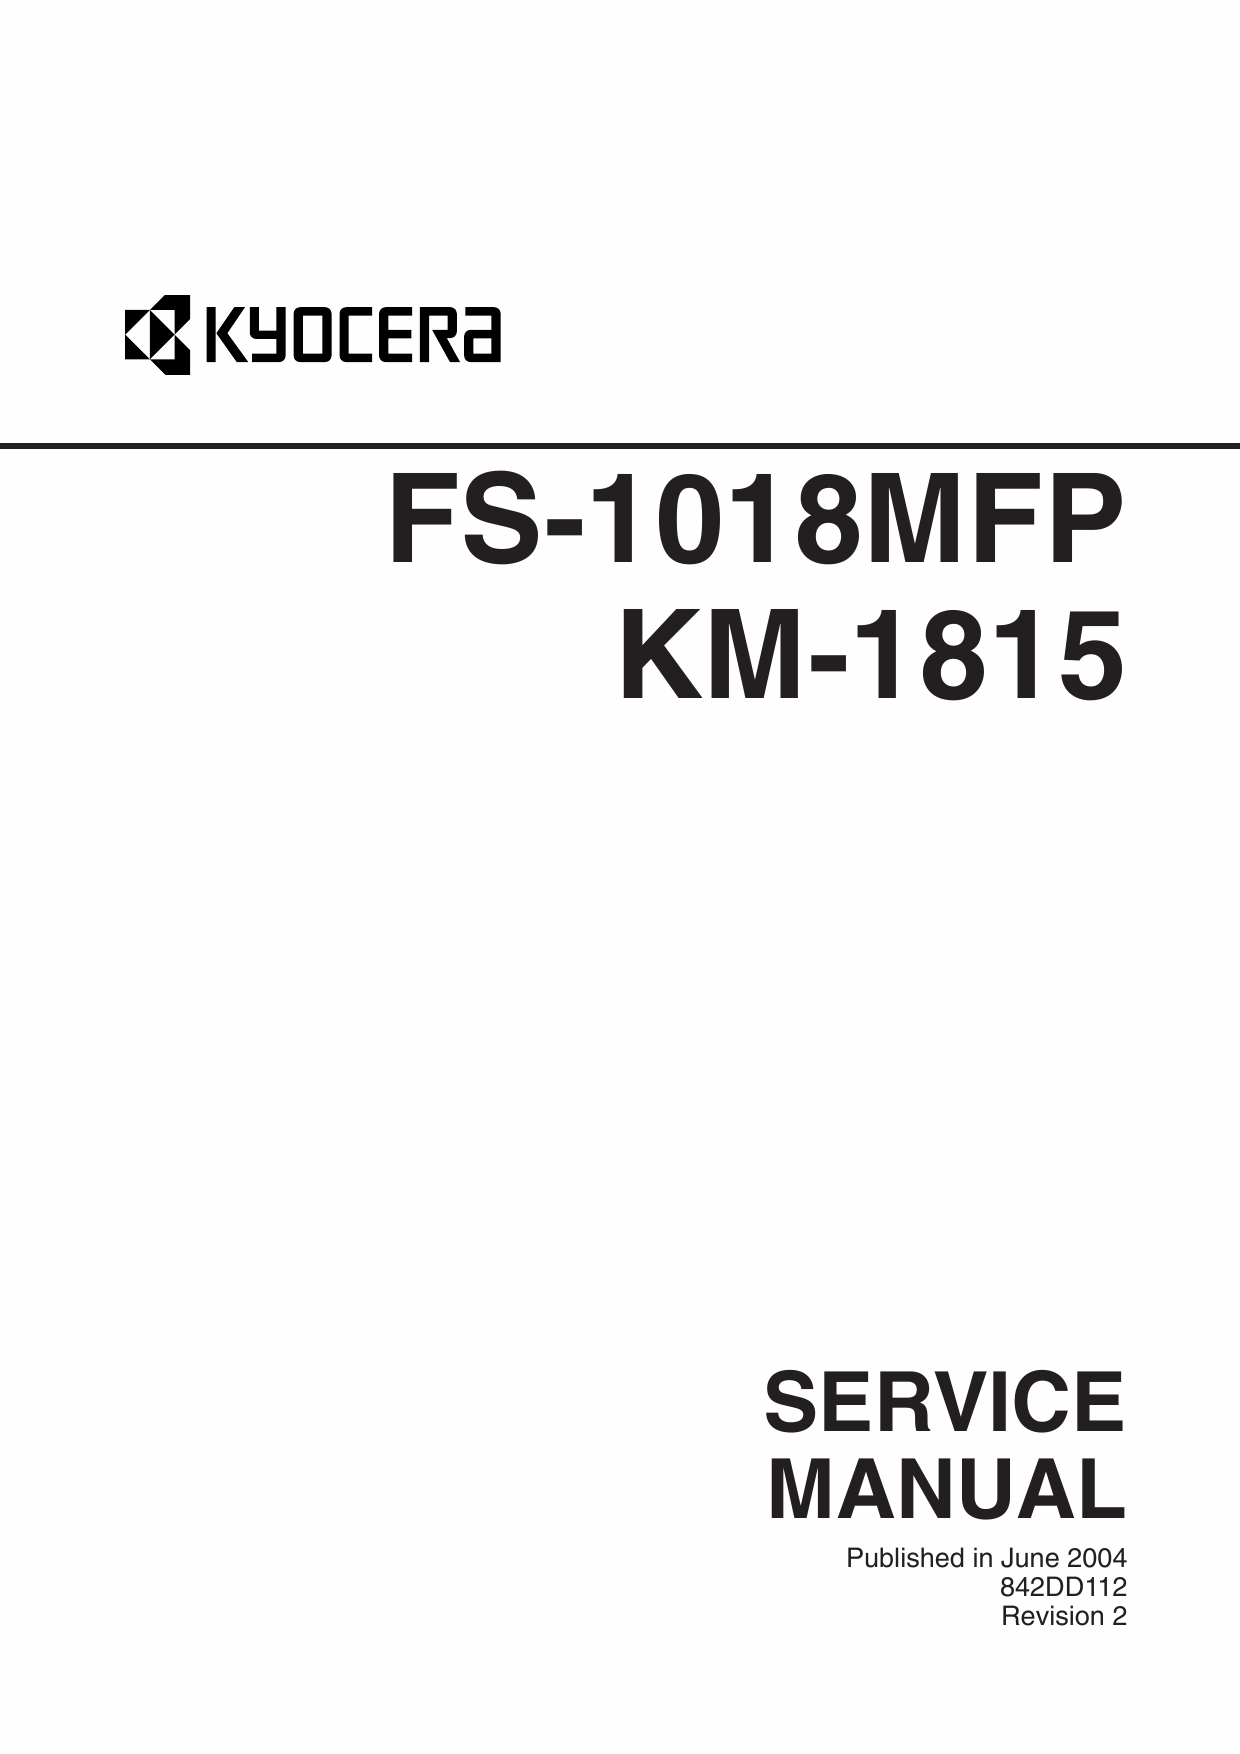 KYOCERA MFP FS-1018MFP KM-1815 Parts and Service Manual-1